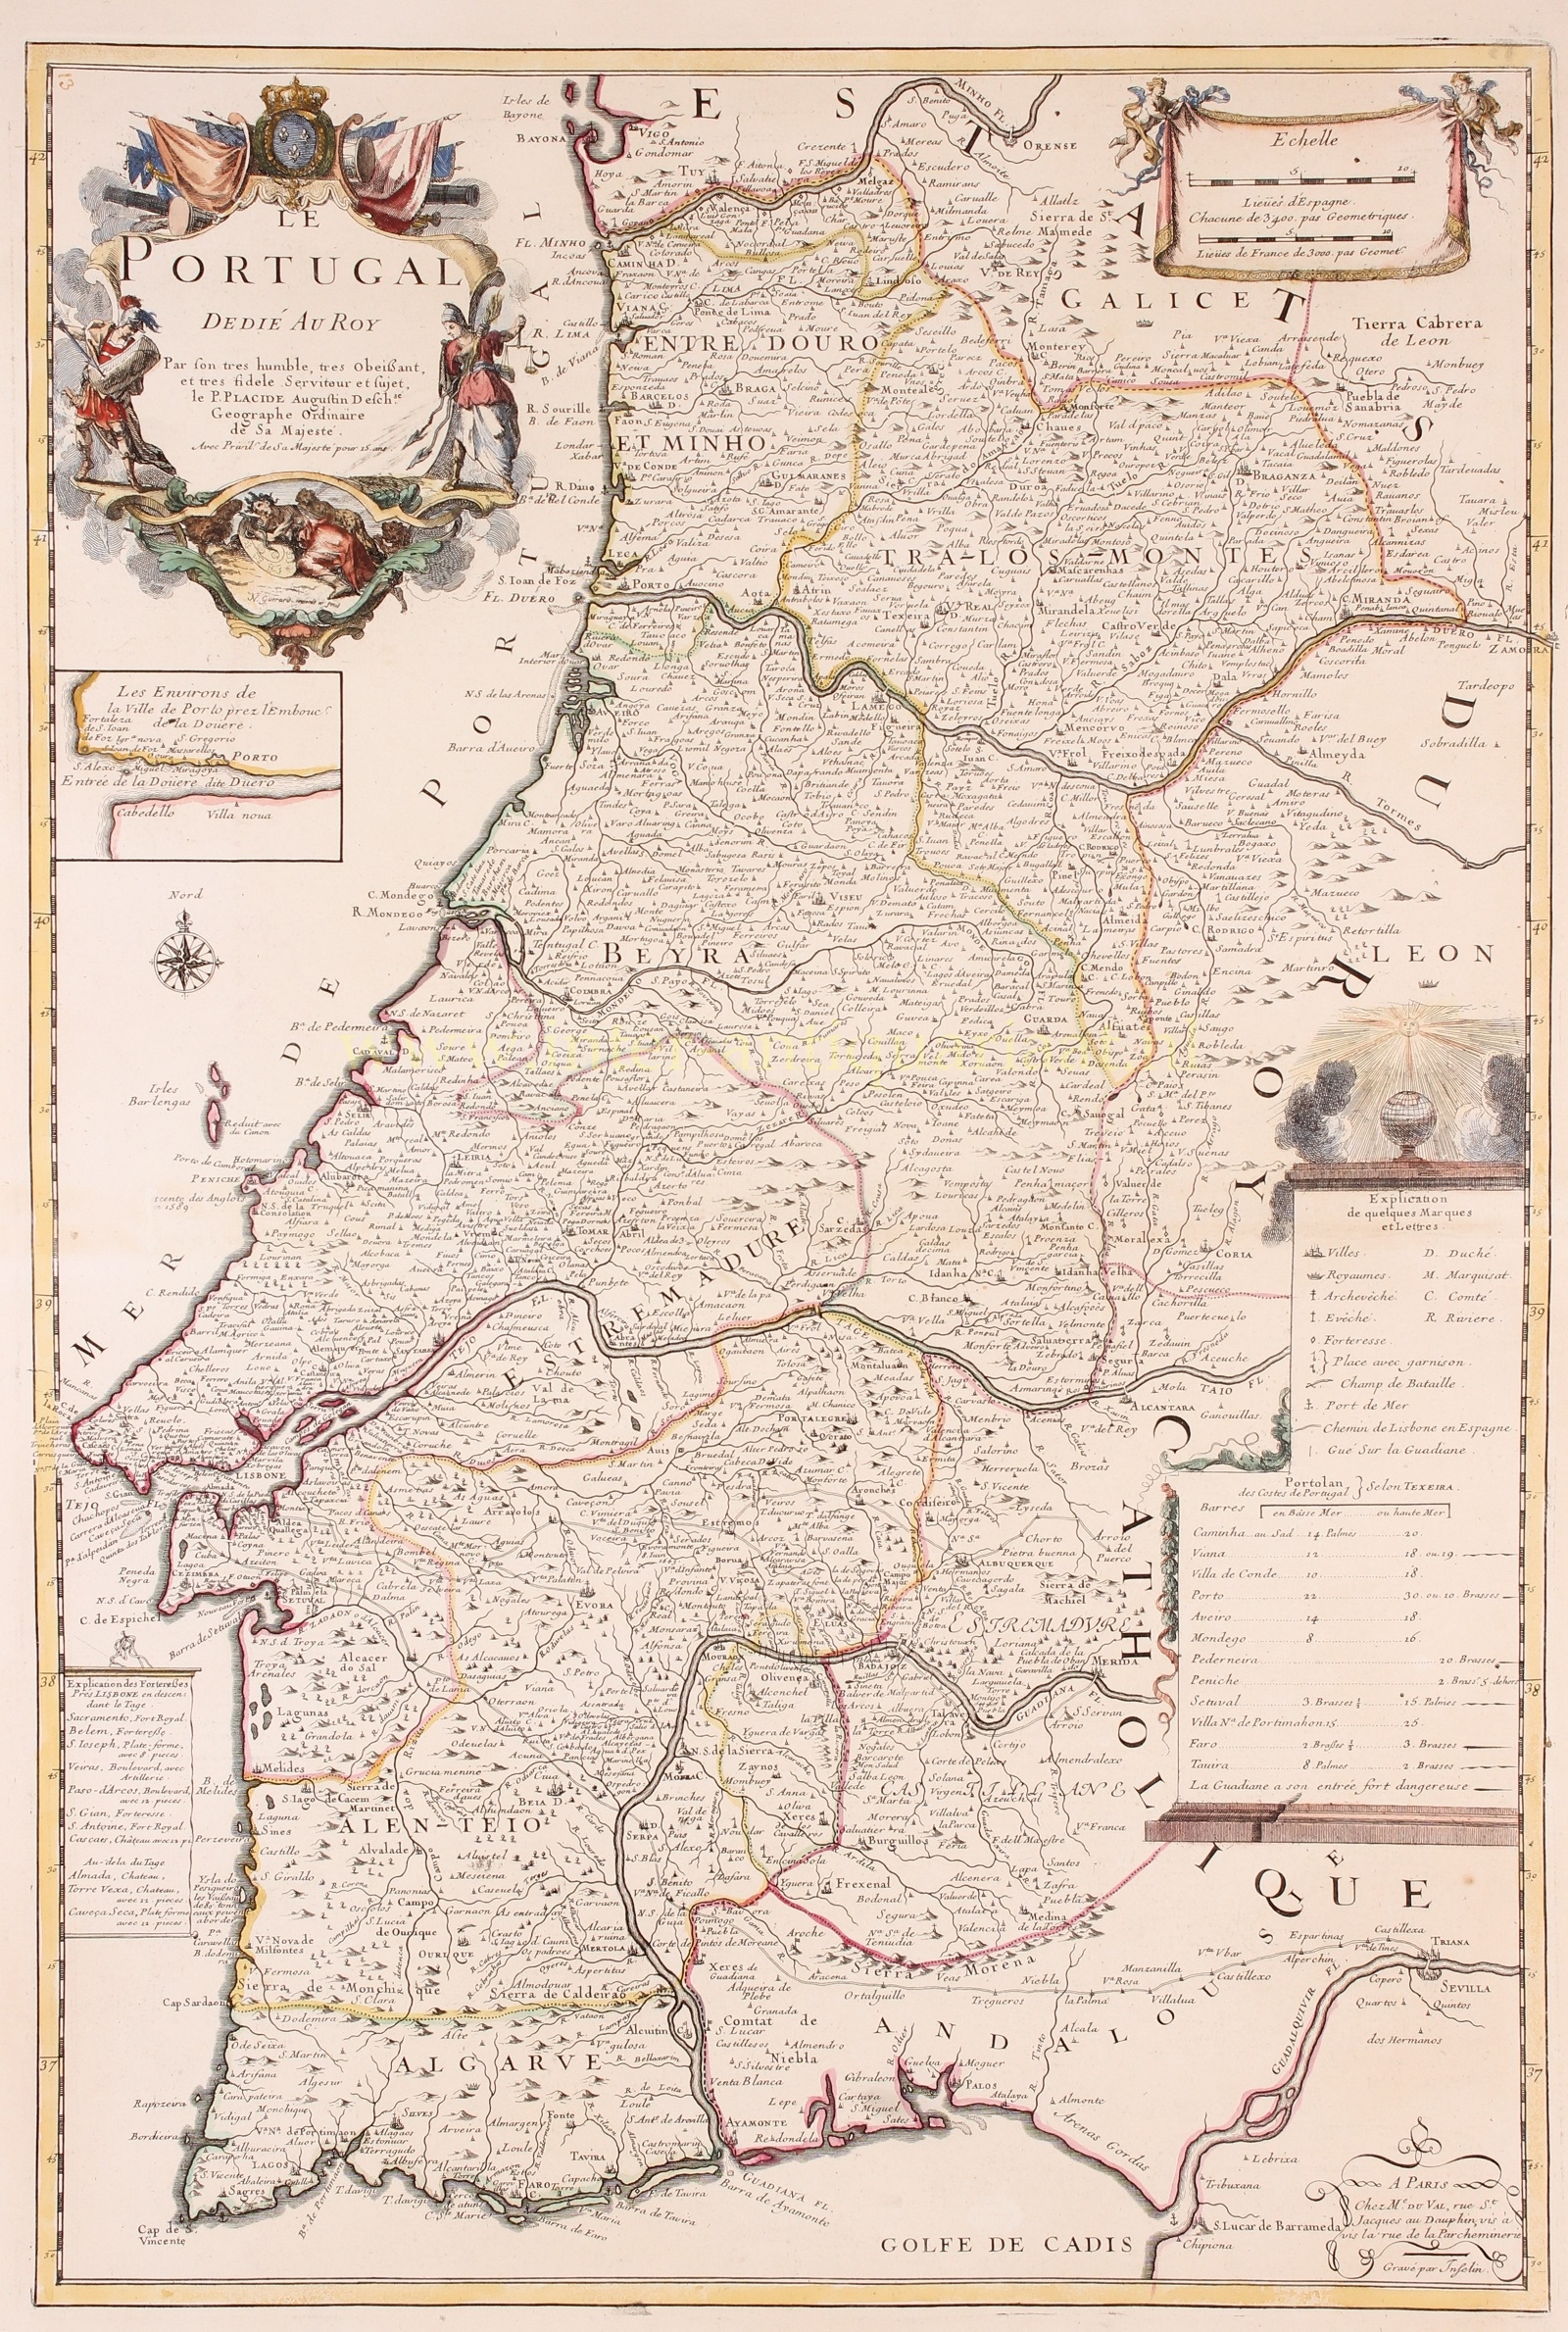  - Portugal - Pierre DuVal + Placide de Sainte-Hlne, c. 1700